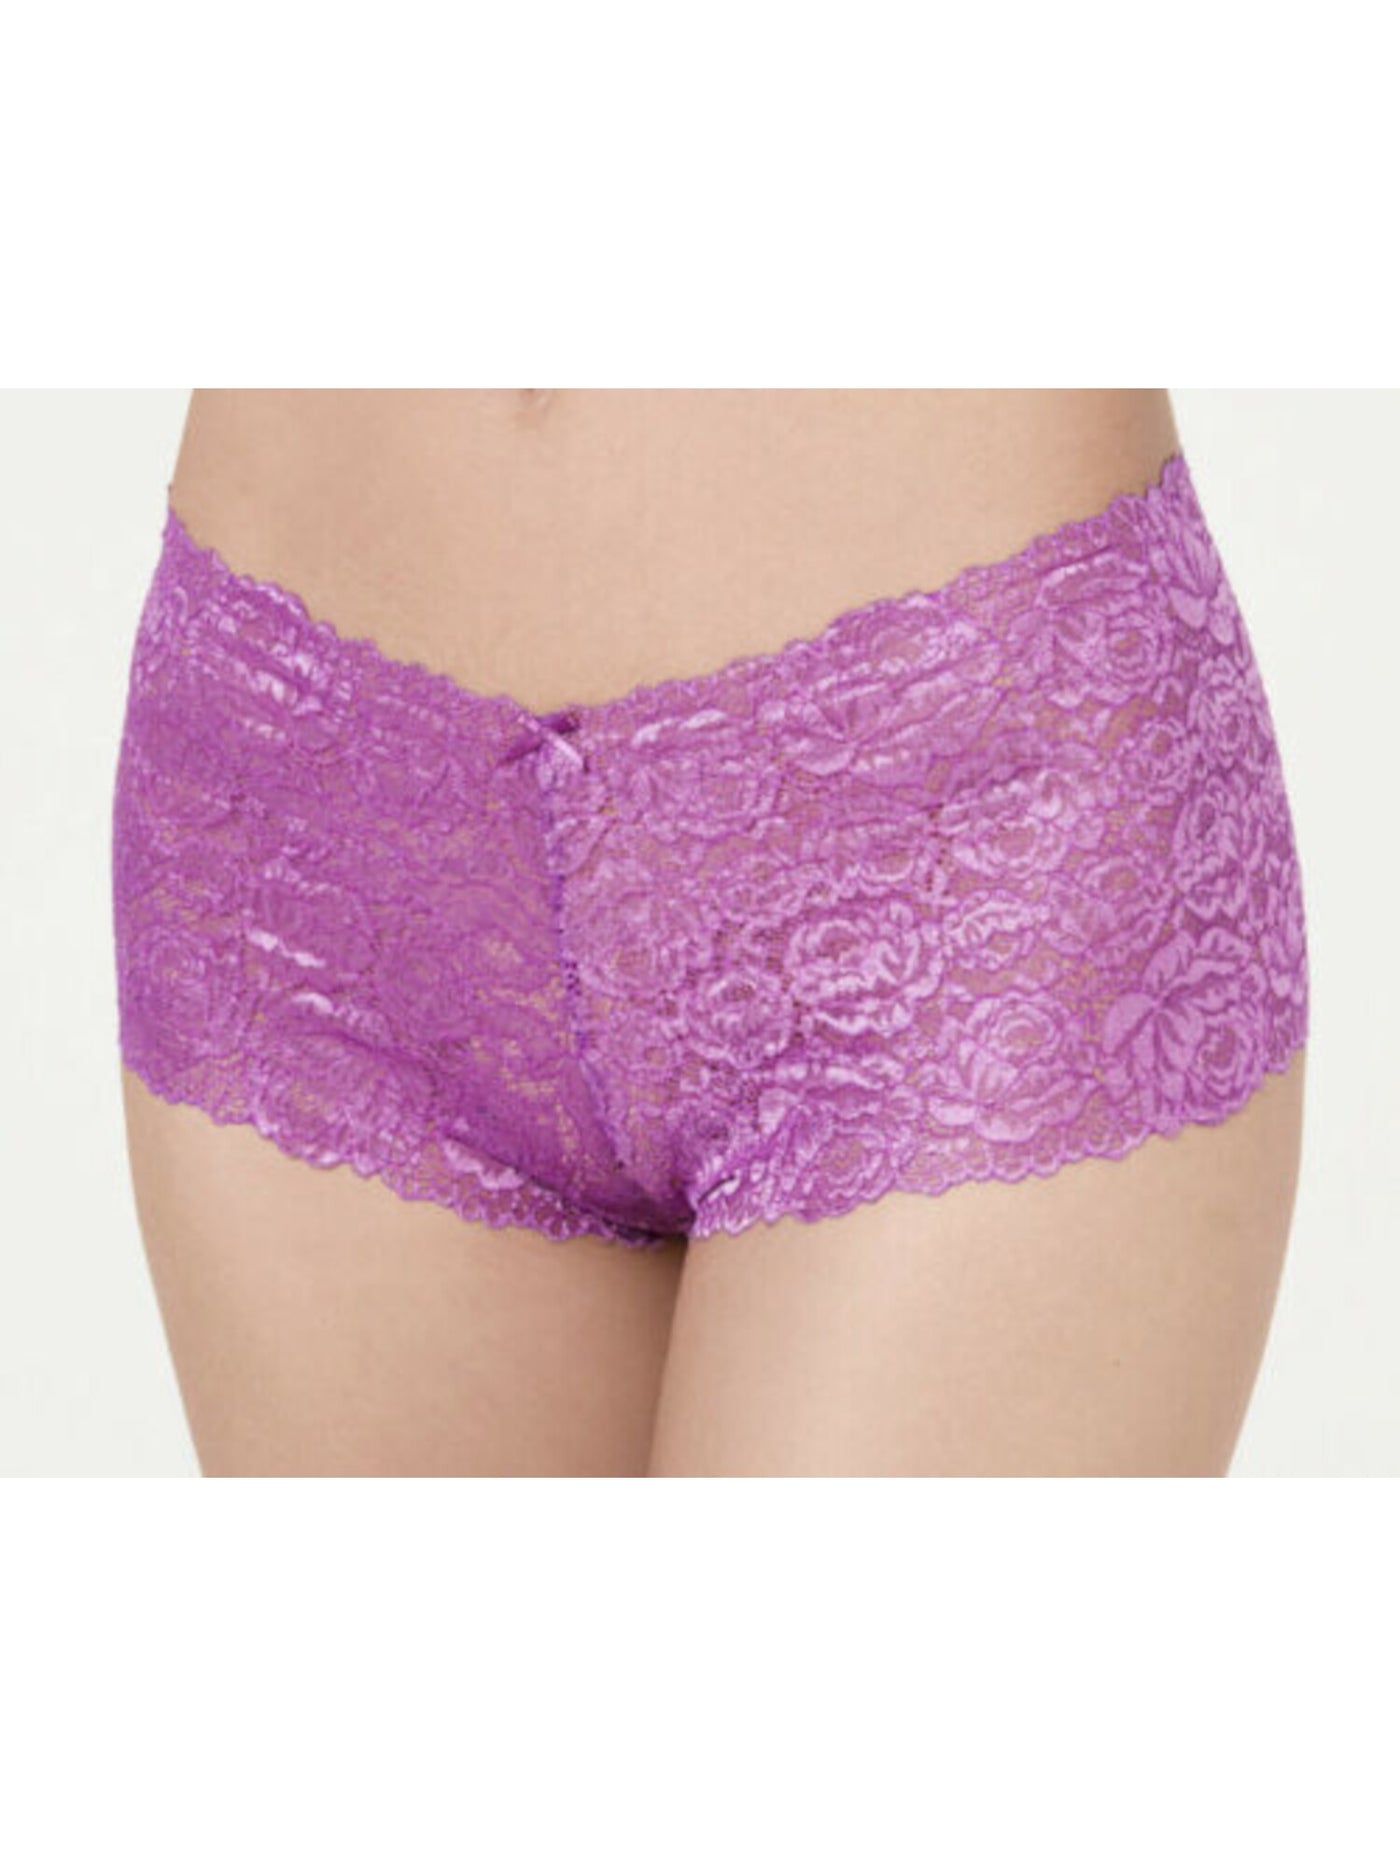 MAMIA Intimates Purple Lace Everyday Boy Short Size: S